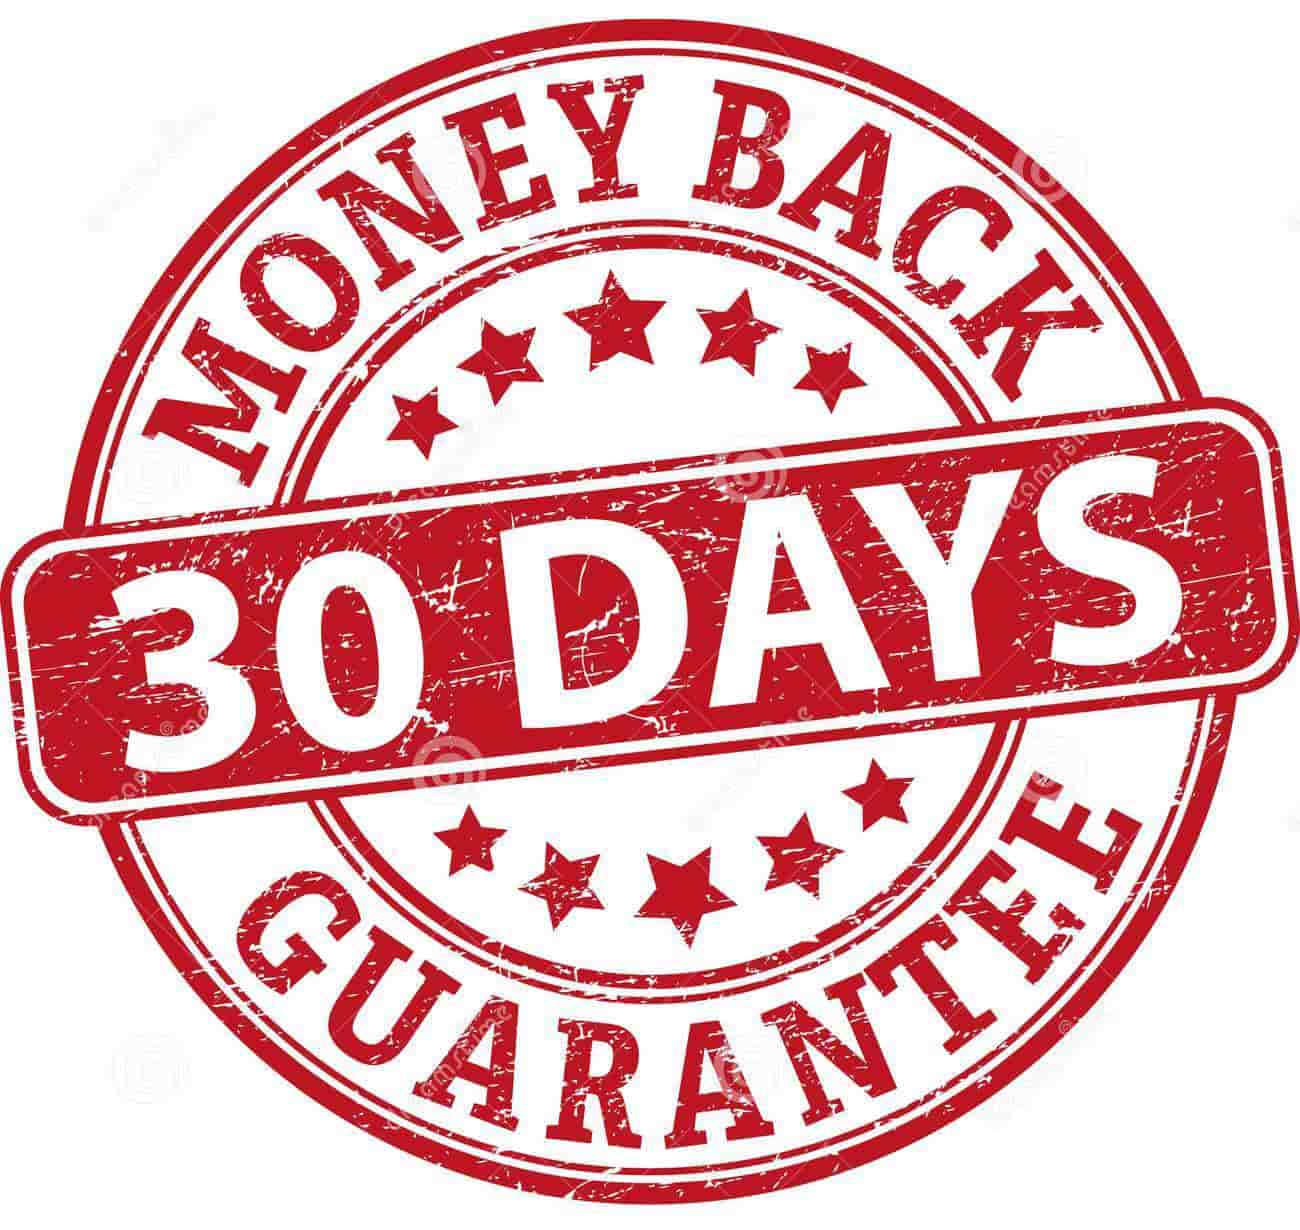 30-Day money-back guarantee